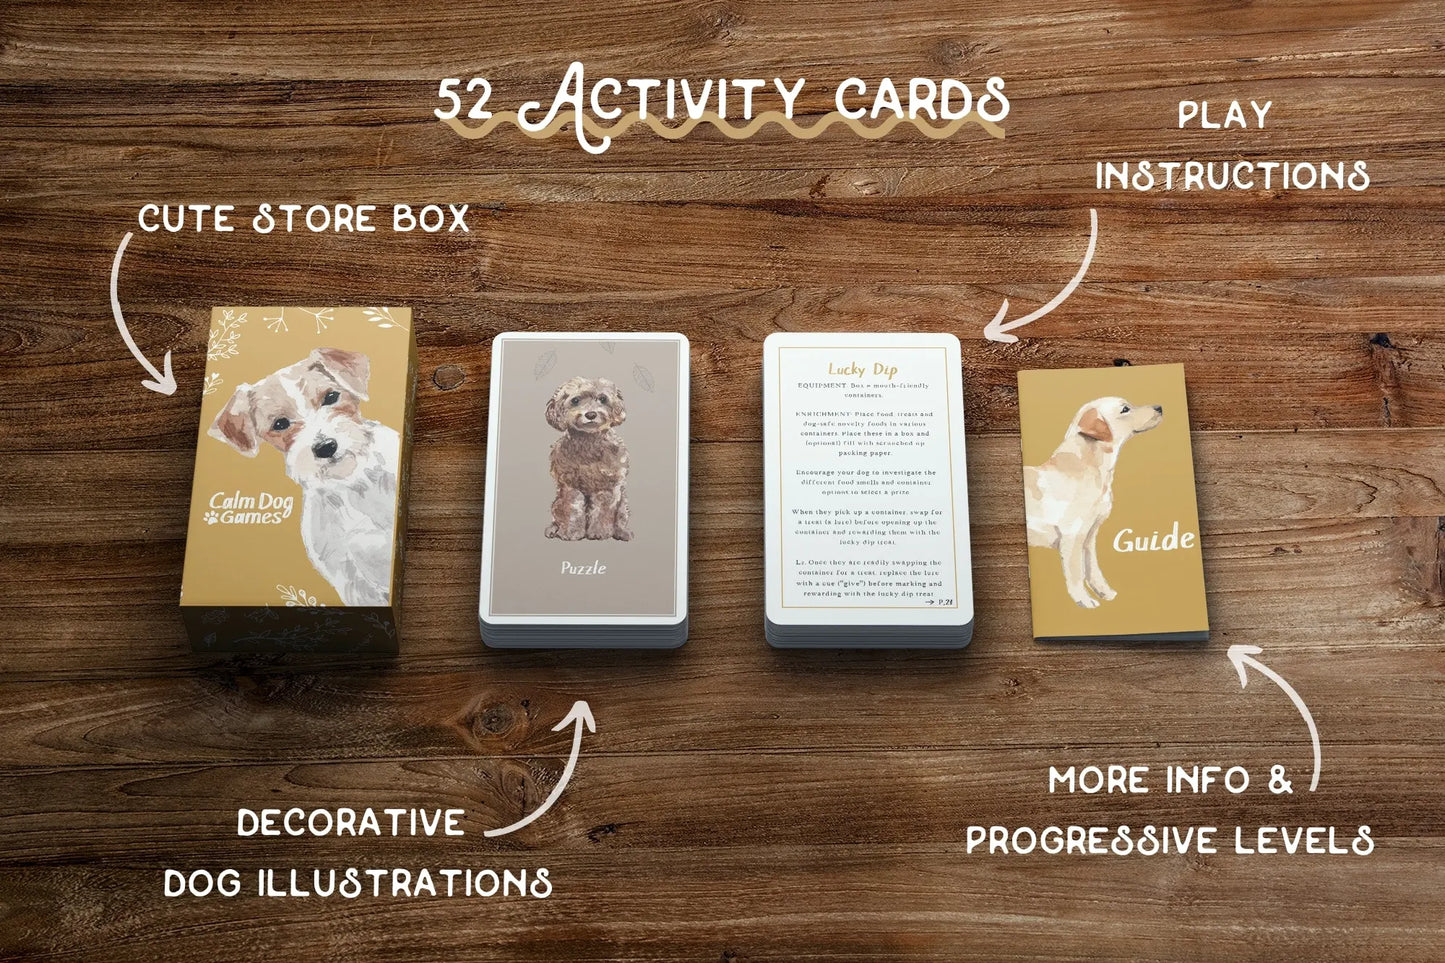 Calm Dog Games - Brain Games & Enrichment Activity Deck